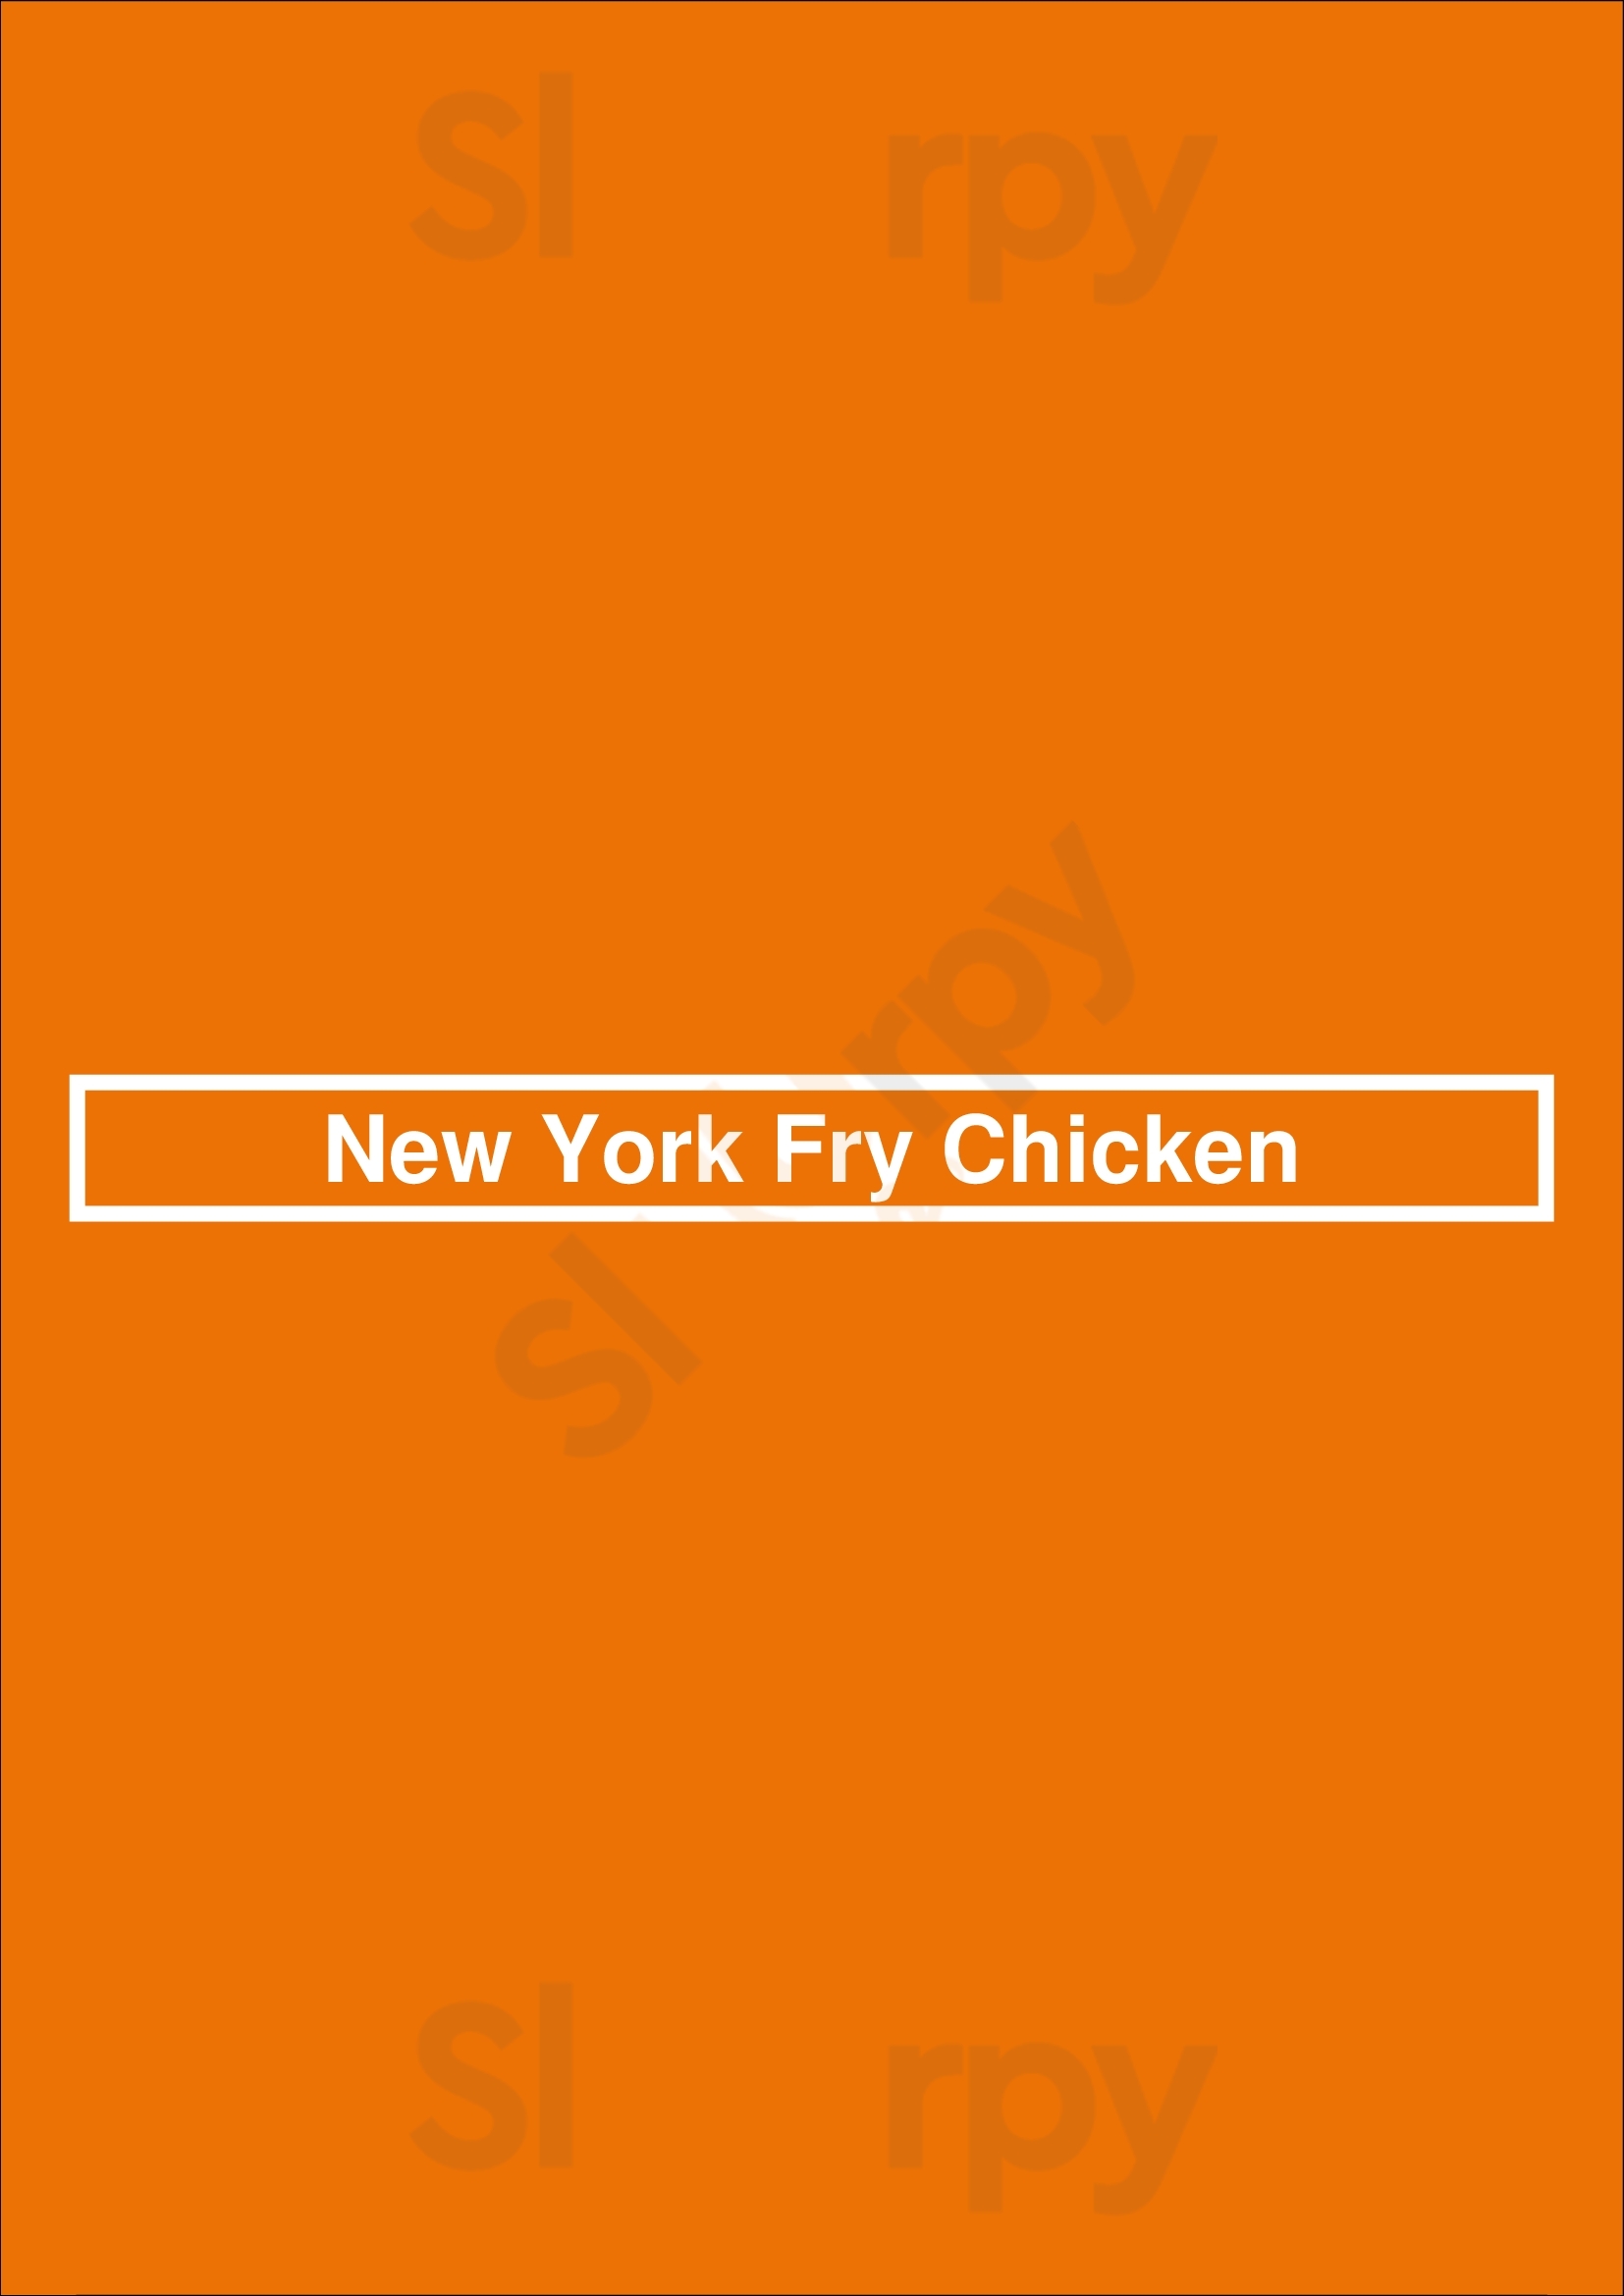 New York Fry Chicken Baltimore Menu - 1